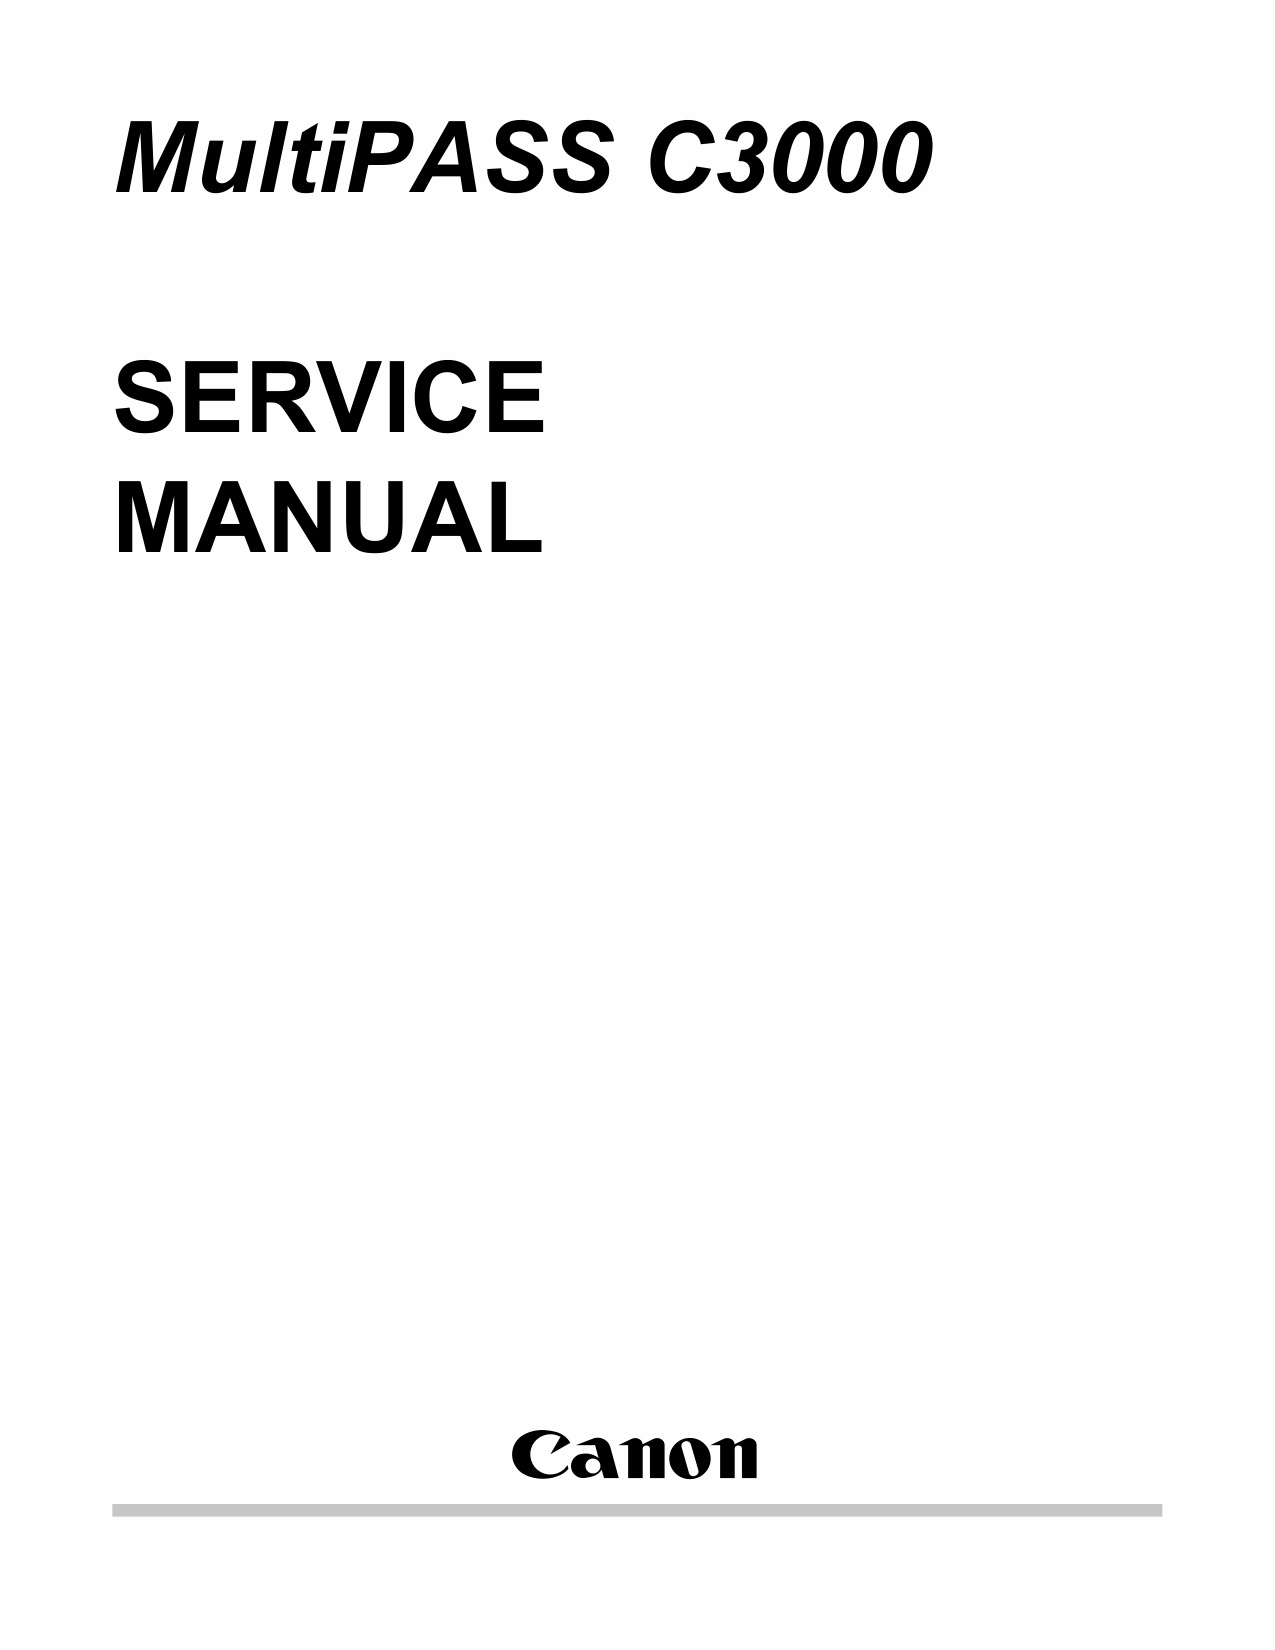 Canon MultiPASS MP-C3000 Service Manual-1